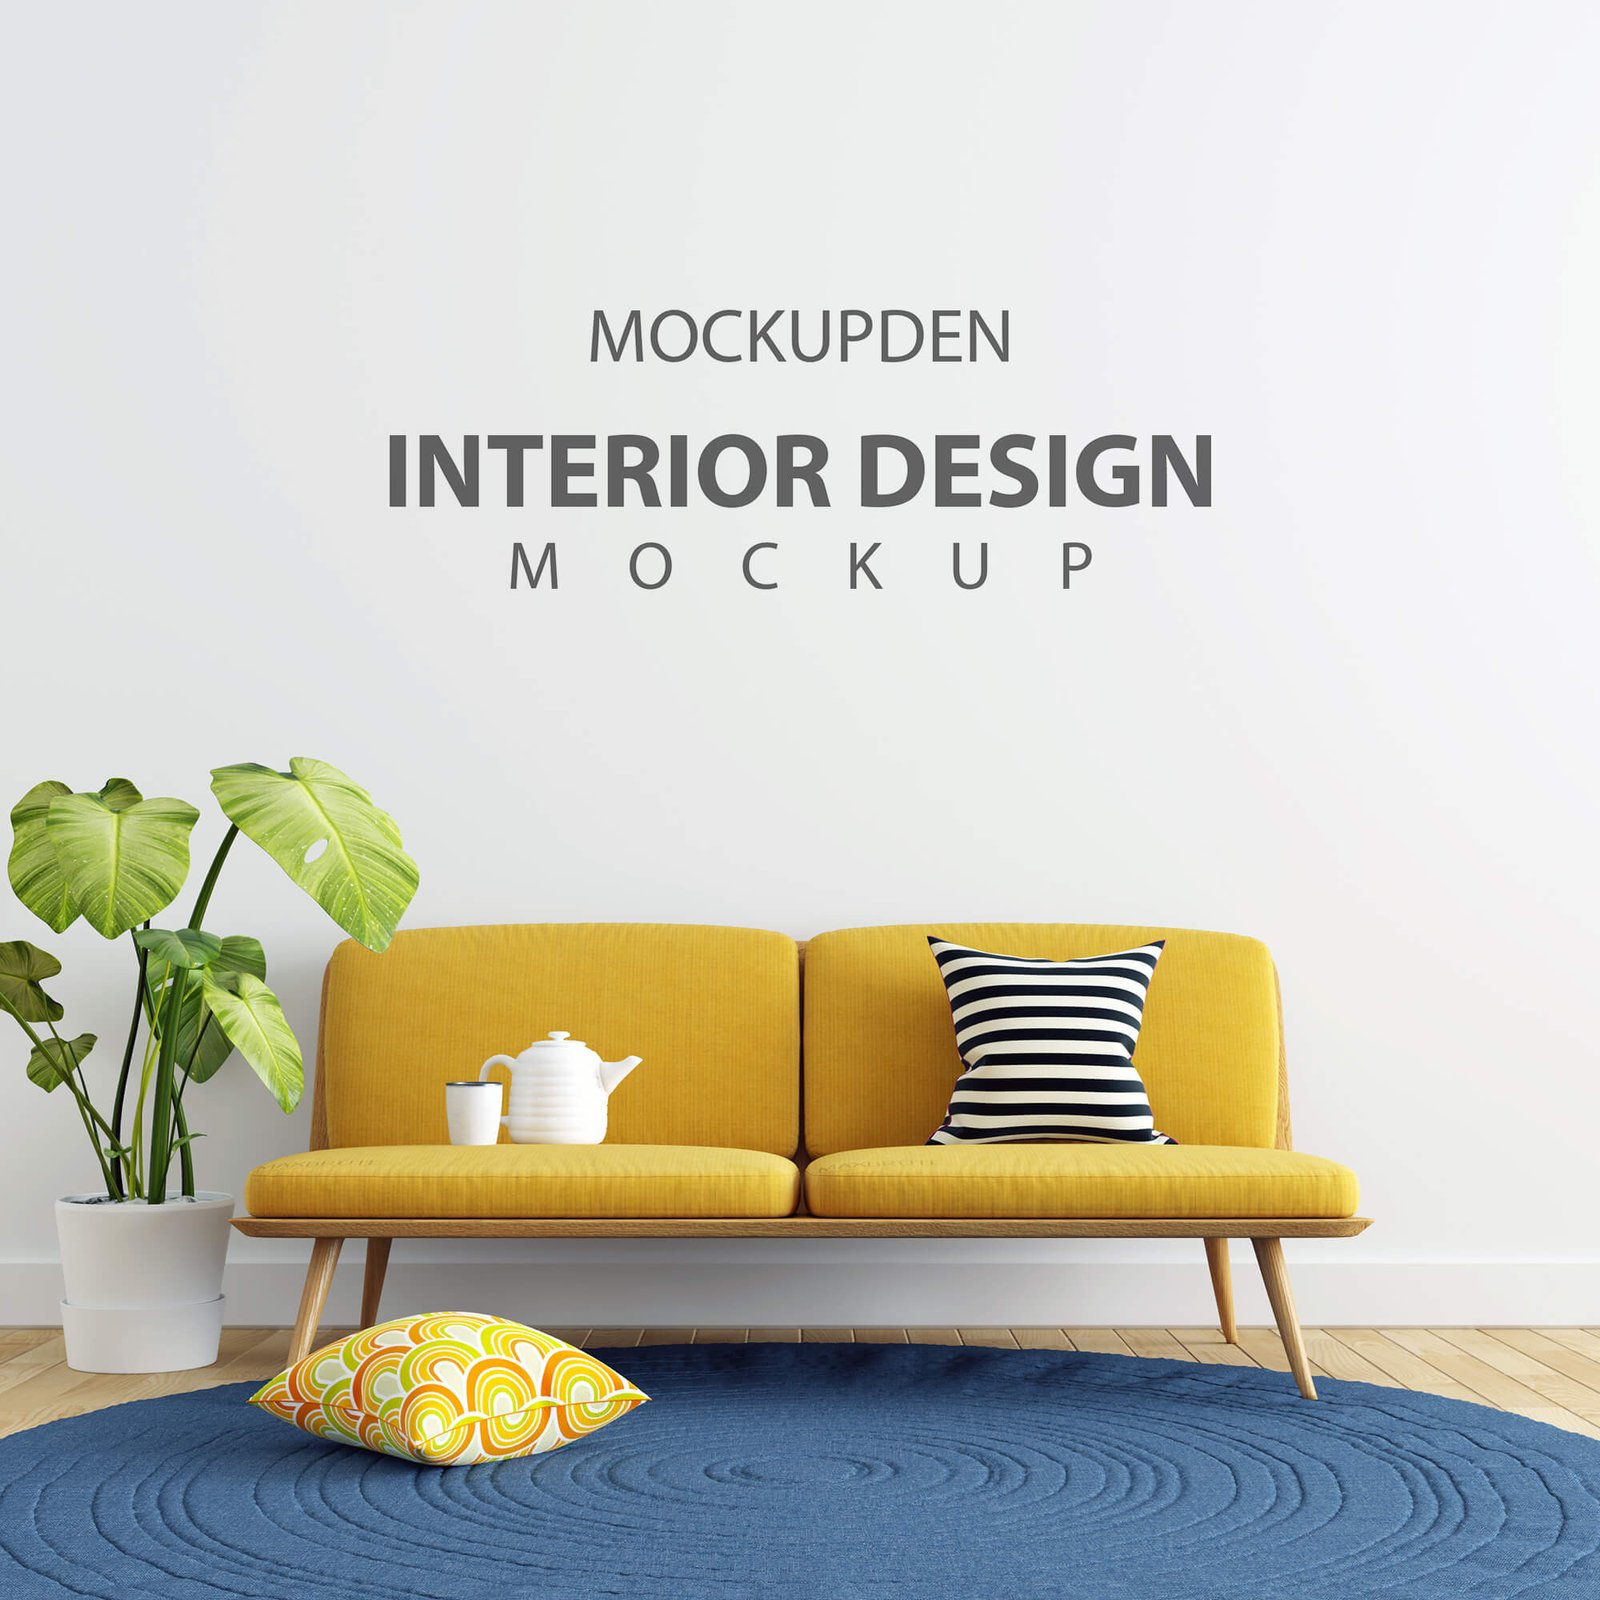 Free Interior Design Mockup PSD Template